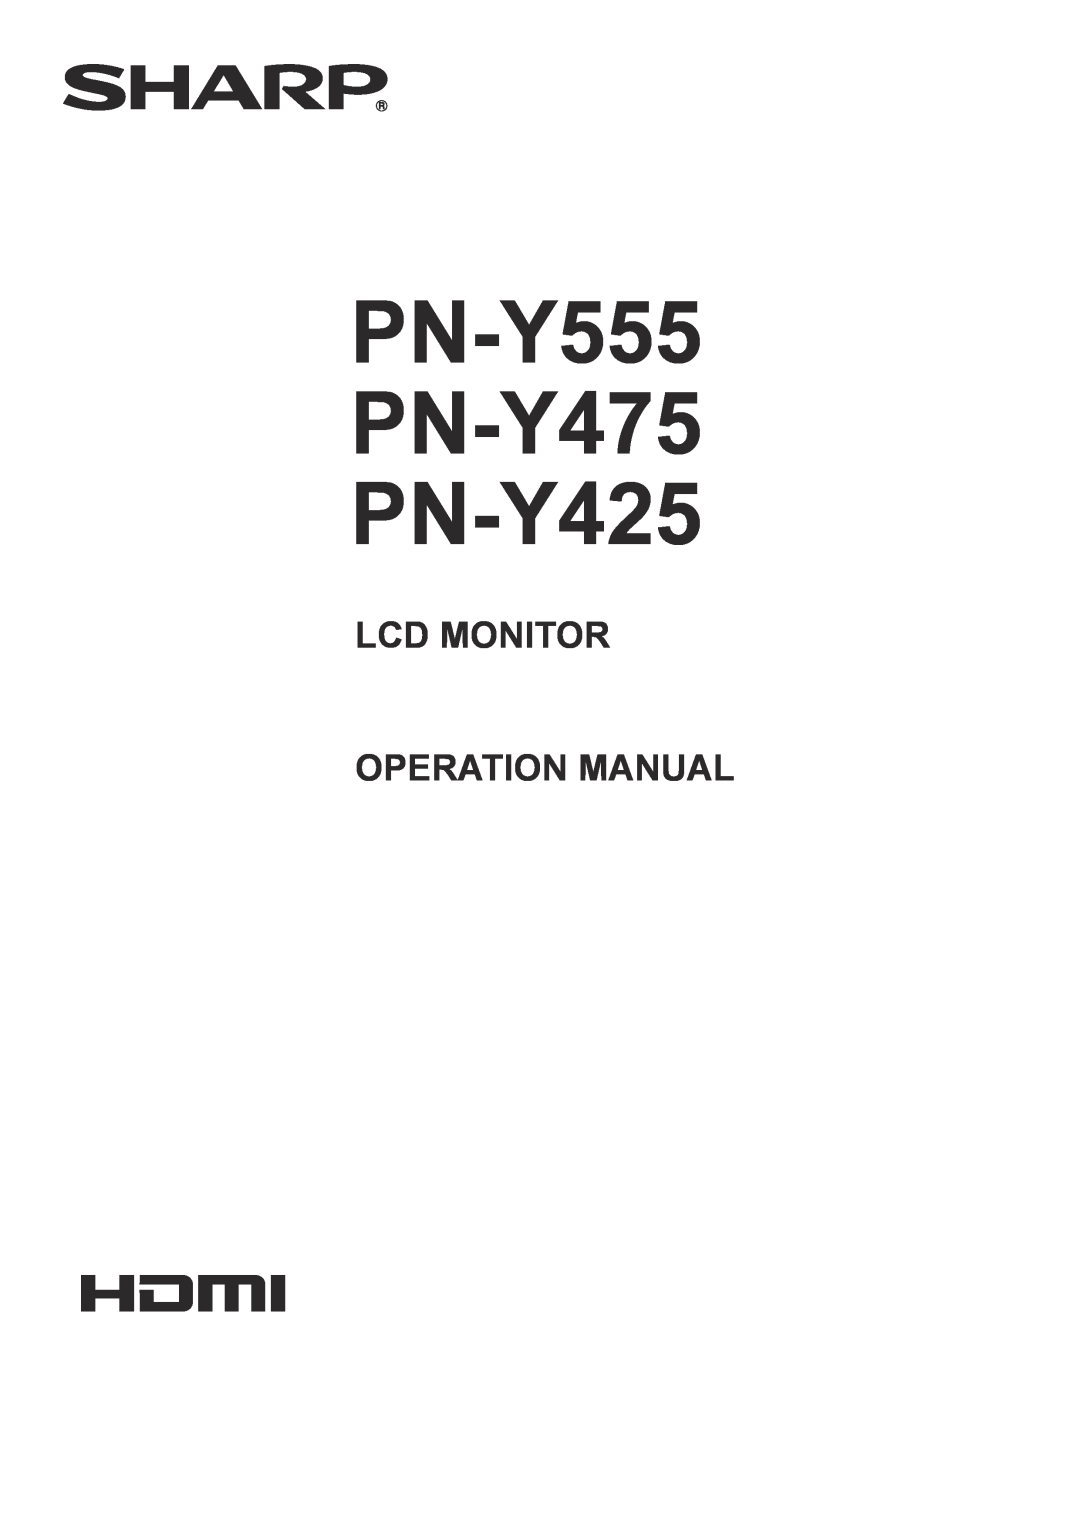 Sharp operation manual PN-Y555 PN-Y475 PN-Y425, Lcd Monitor Operation Manual 